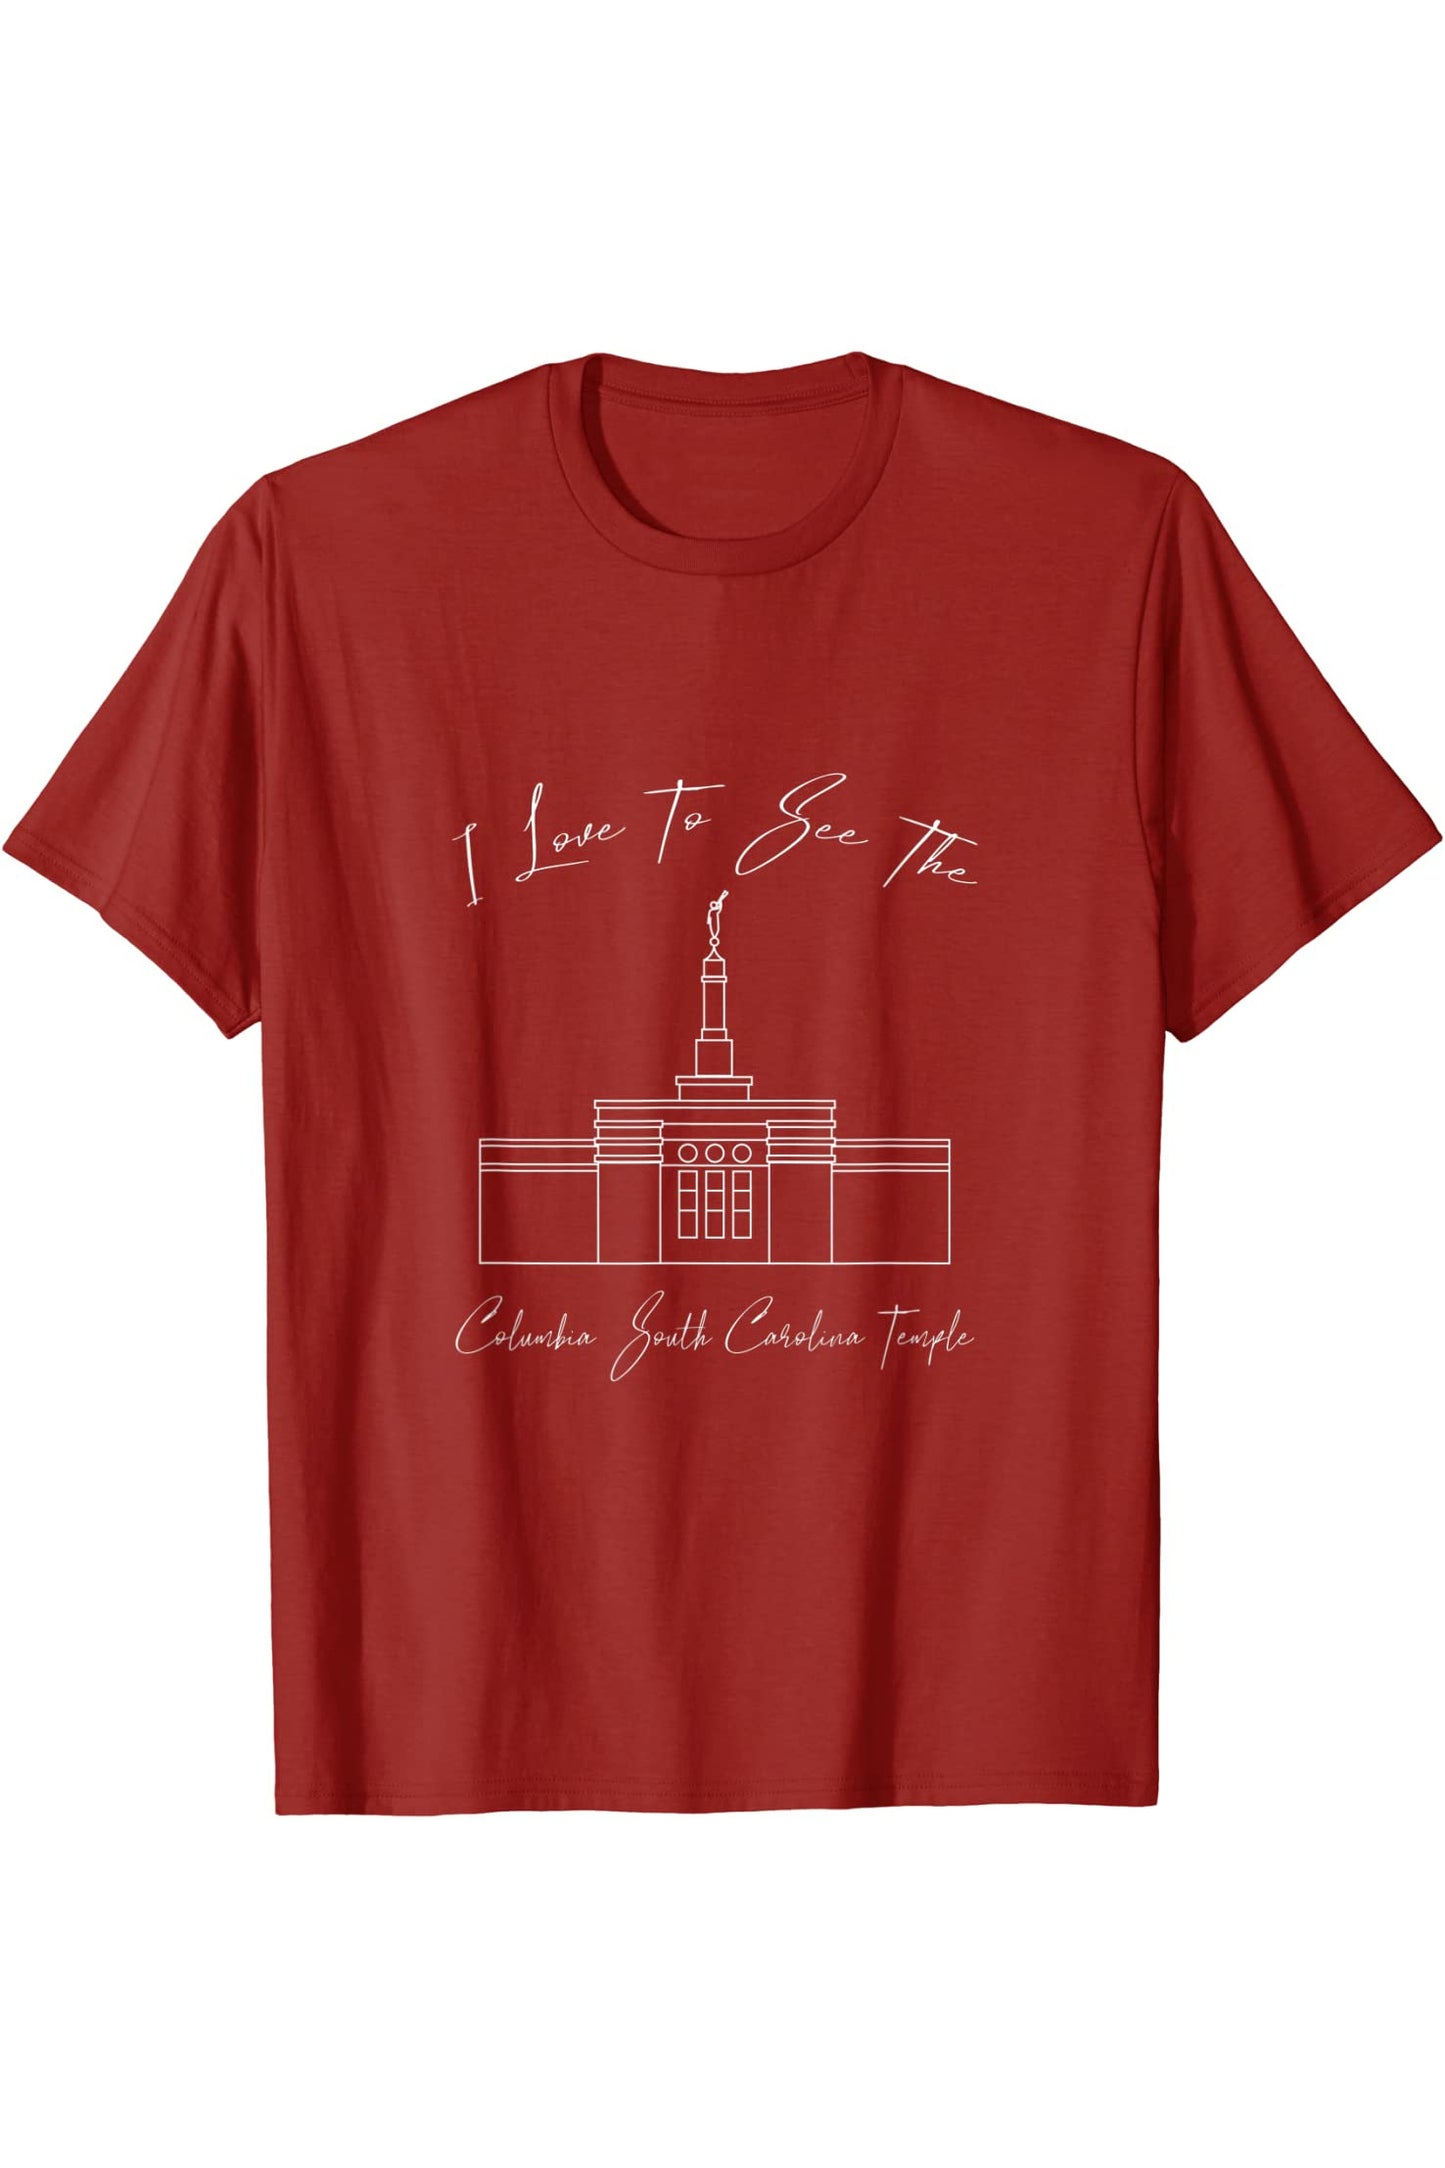 Columbia South Carolina Temple T-Shirt - Calligraphy Style (English) US